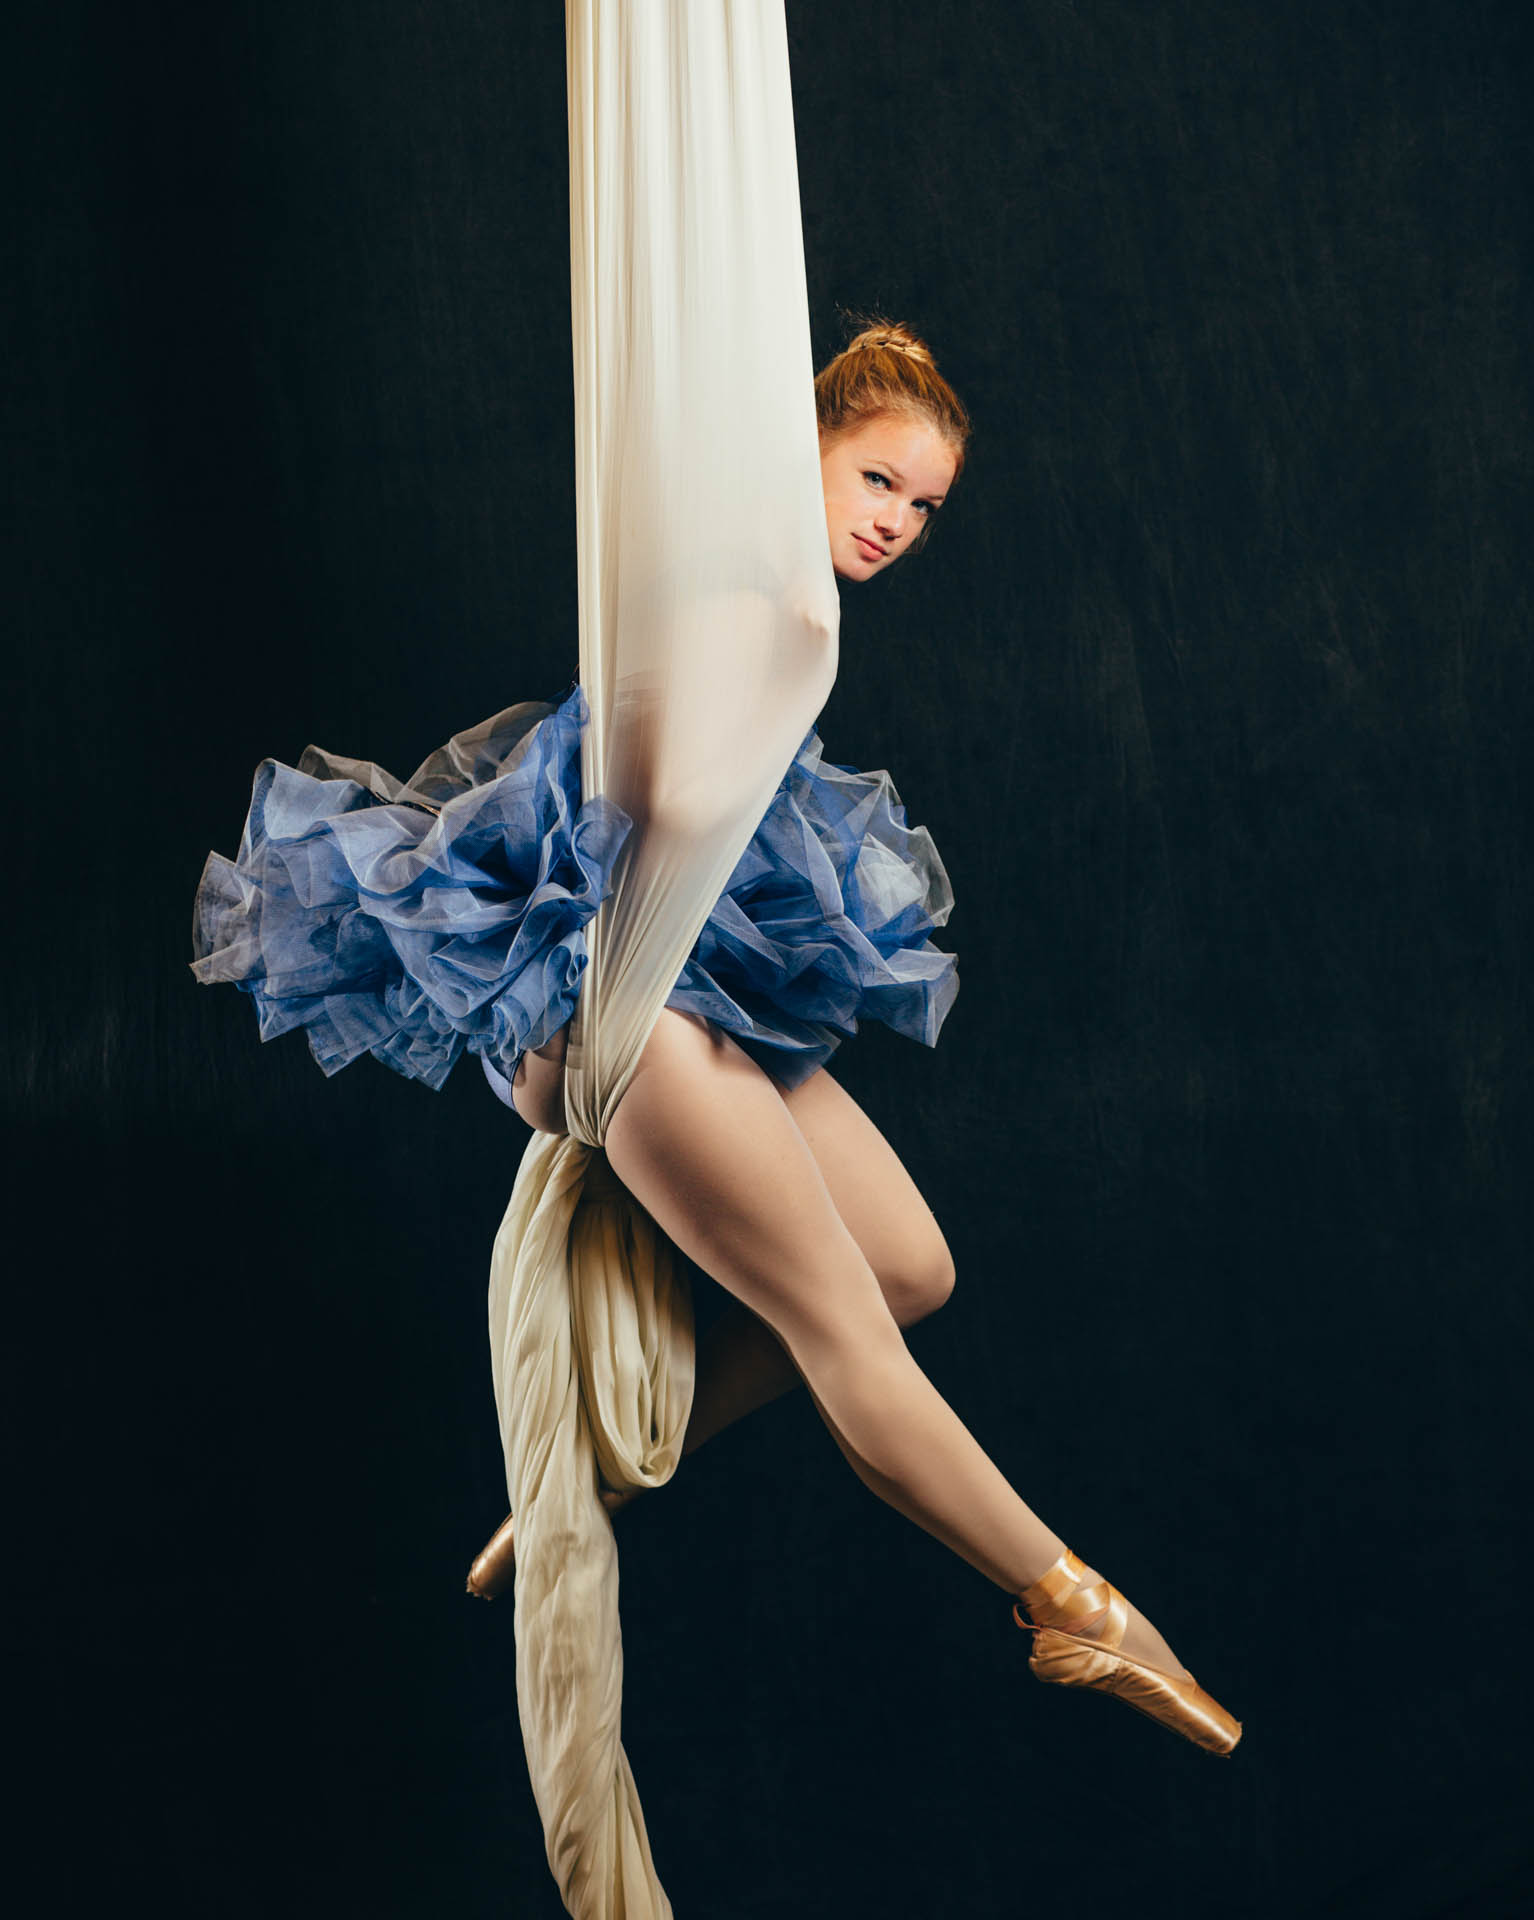 luisa-ballerina-blue-tutu-floating-in-silk-ropes-8796